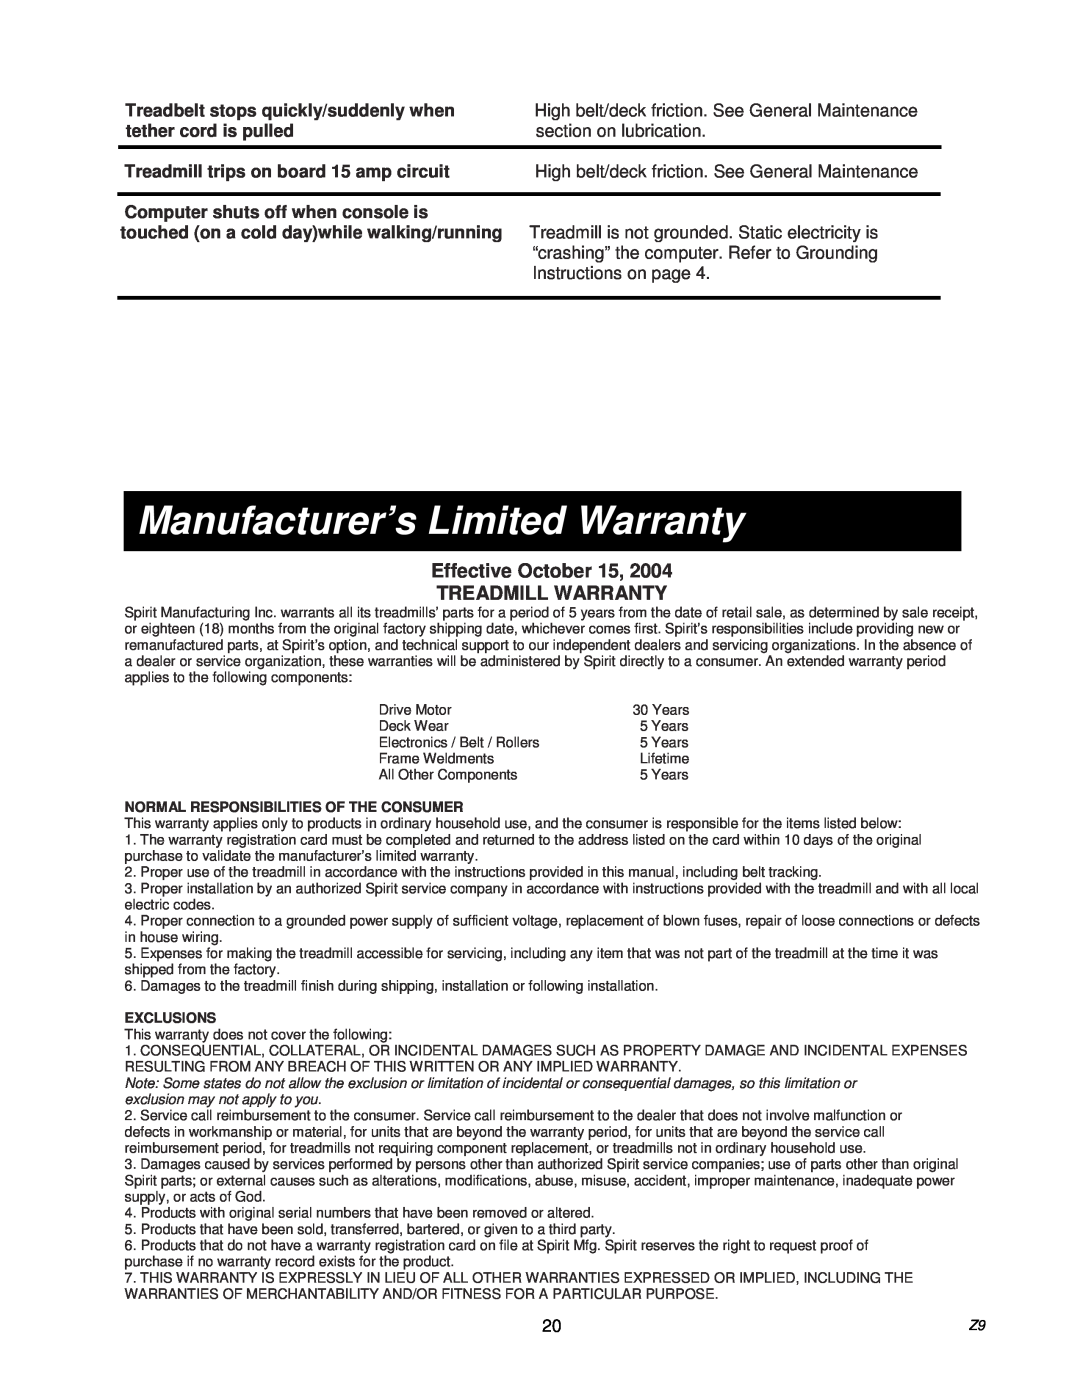 Spirit Z9 Manufacturer’s Limited Warranty, Effective October 15 TREADMILL WARRANTY, Treadbelt stops quickly/suddenly when 